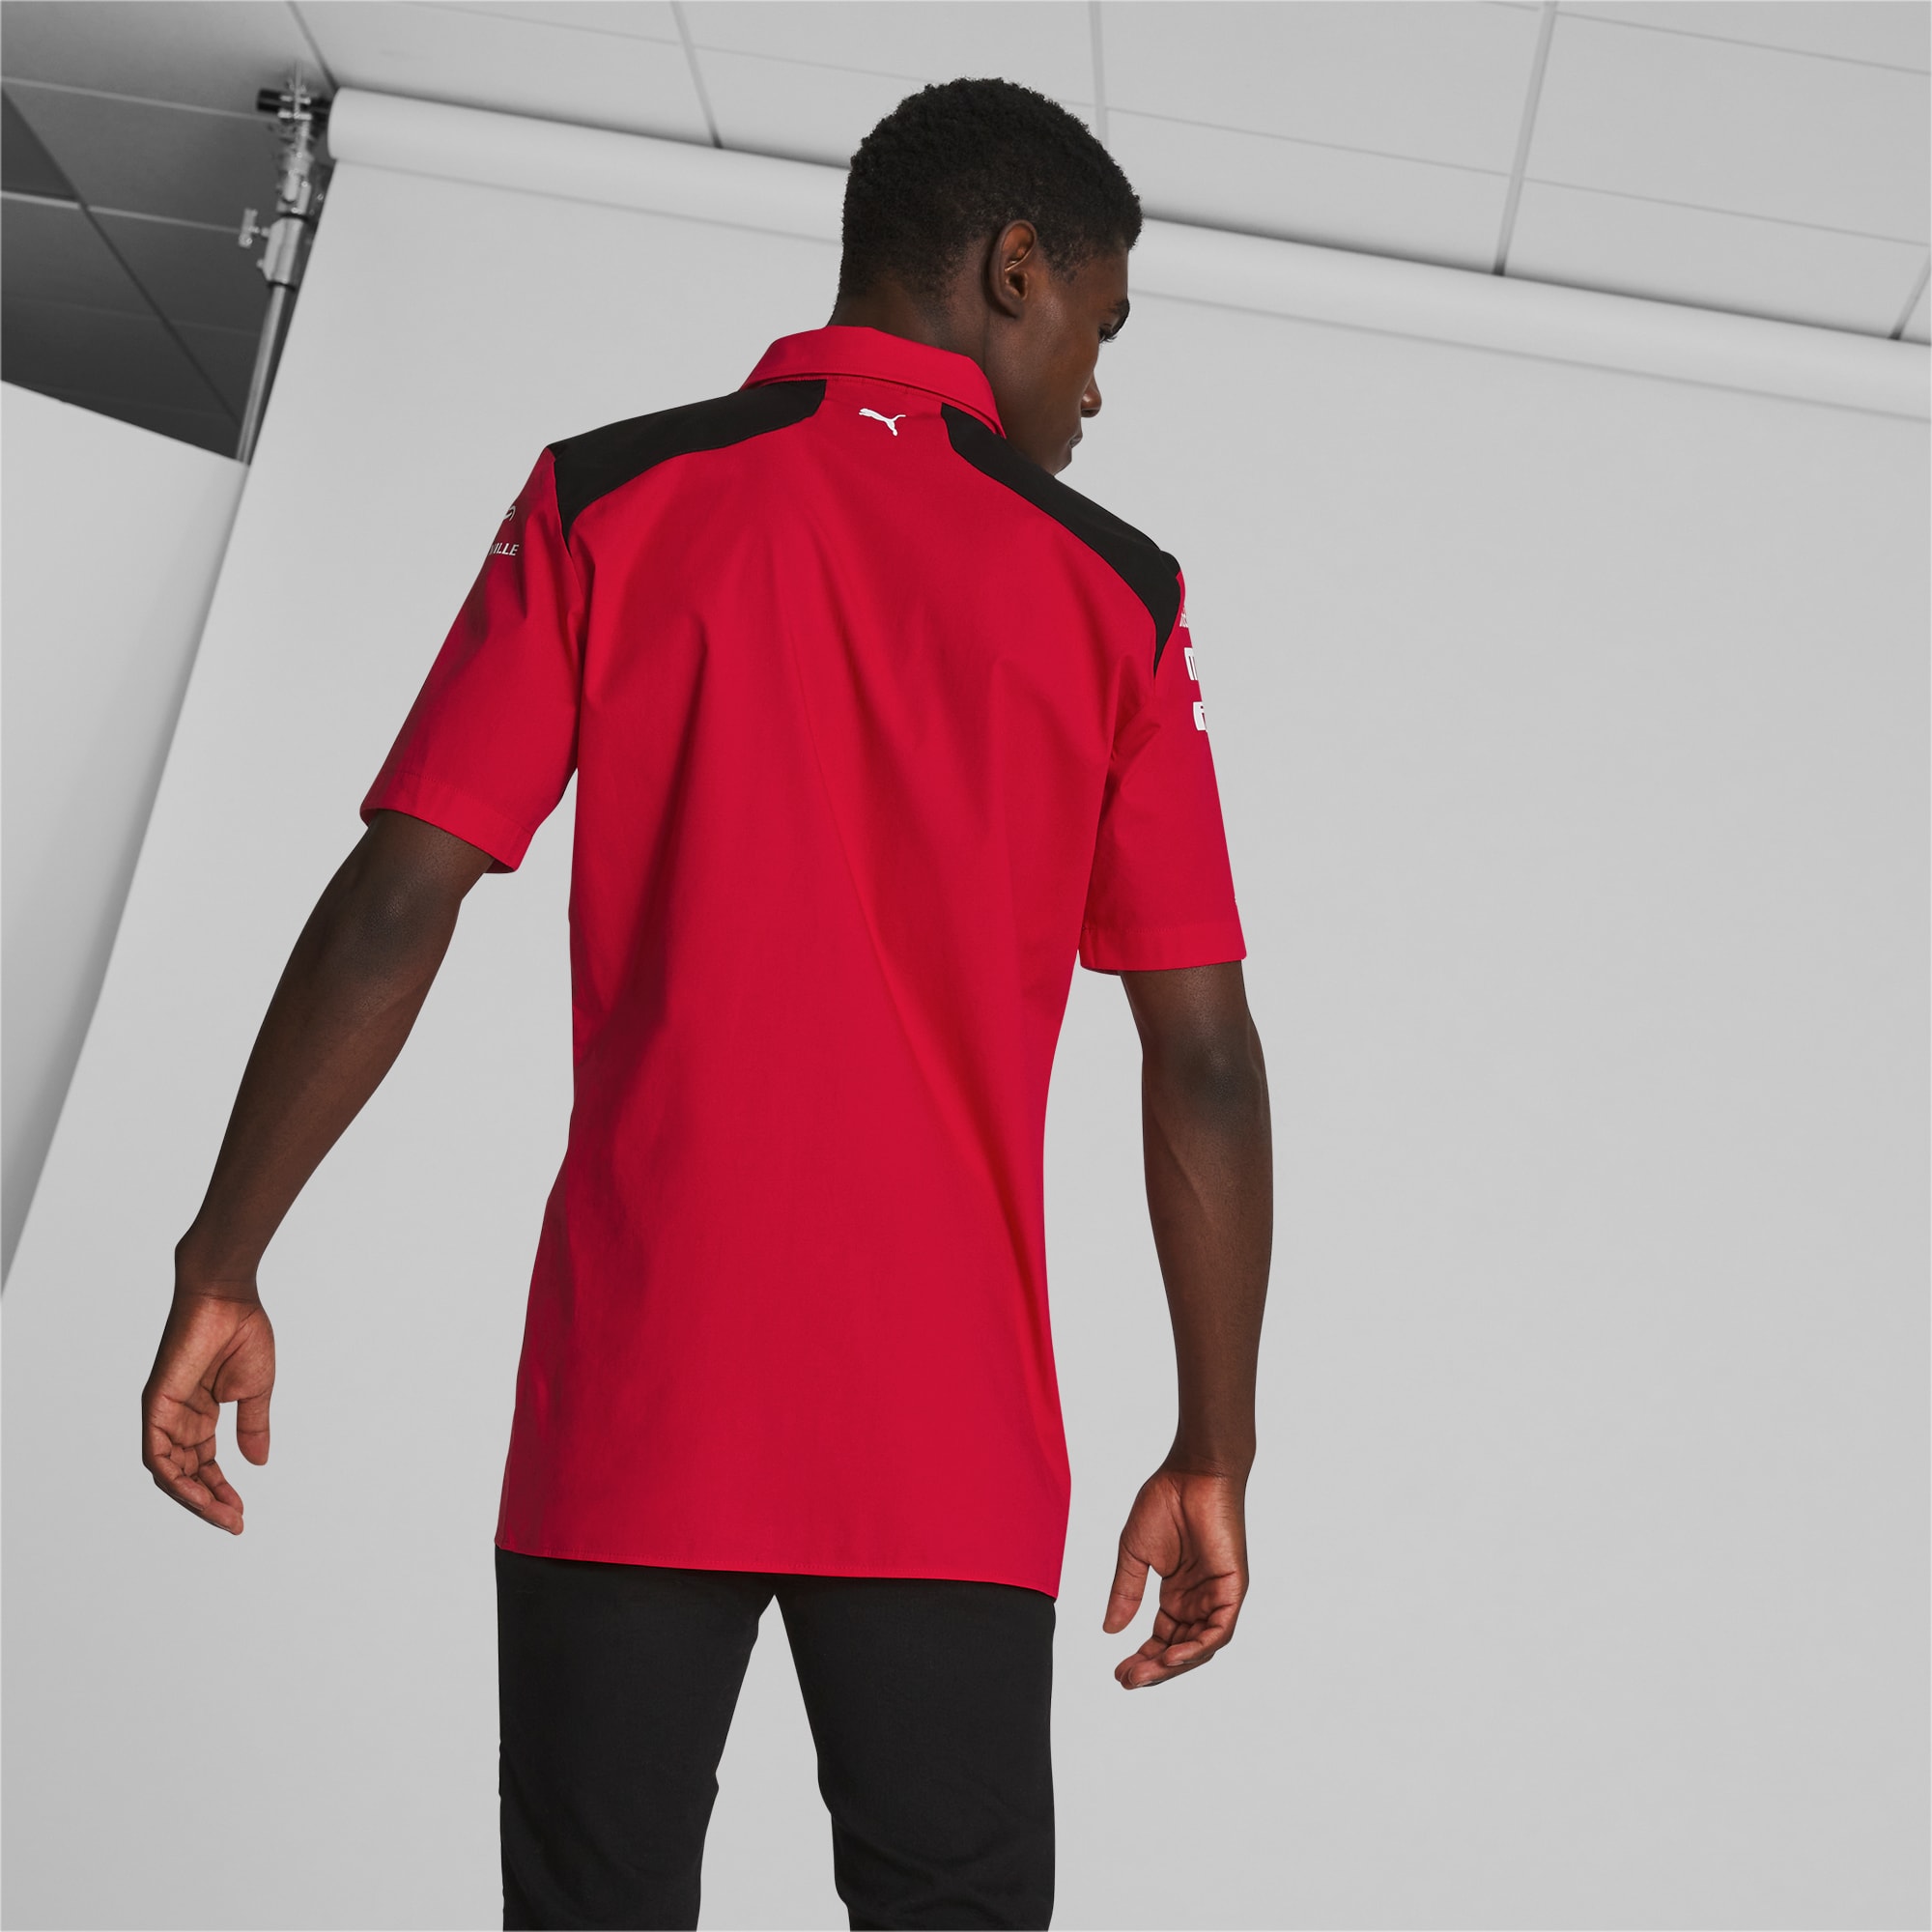 T-shirt Rouge/Blanc Homme Puma Ferrari Energy pas cher